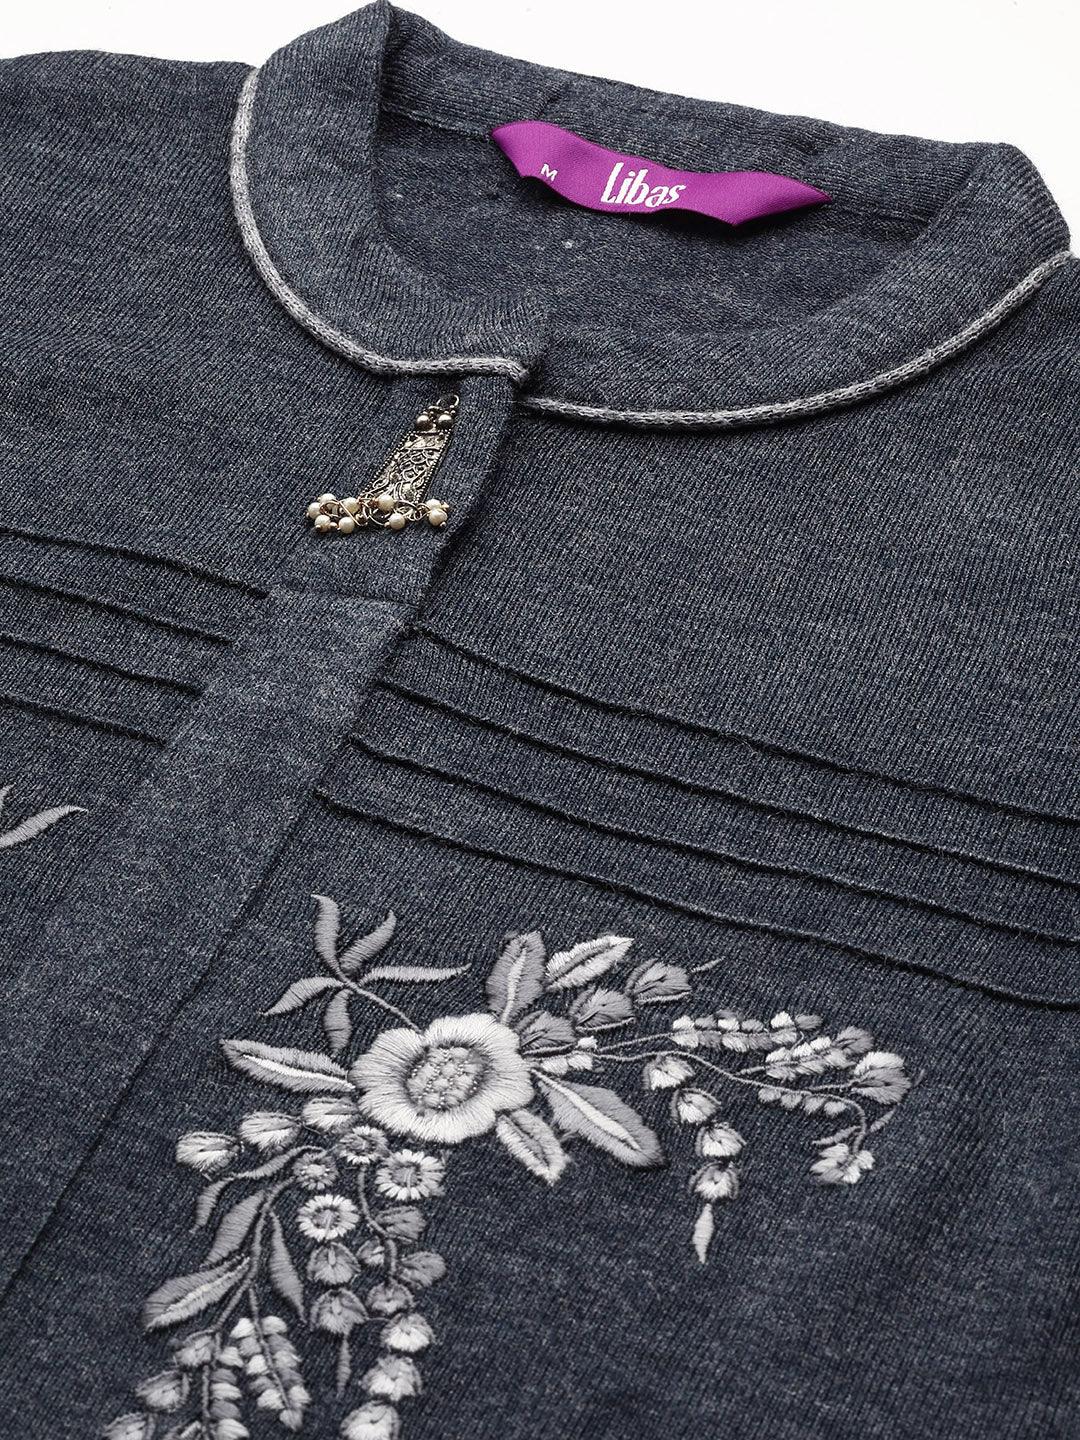 Grey Embroidered Wool Straight Kurta - Libas